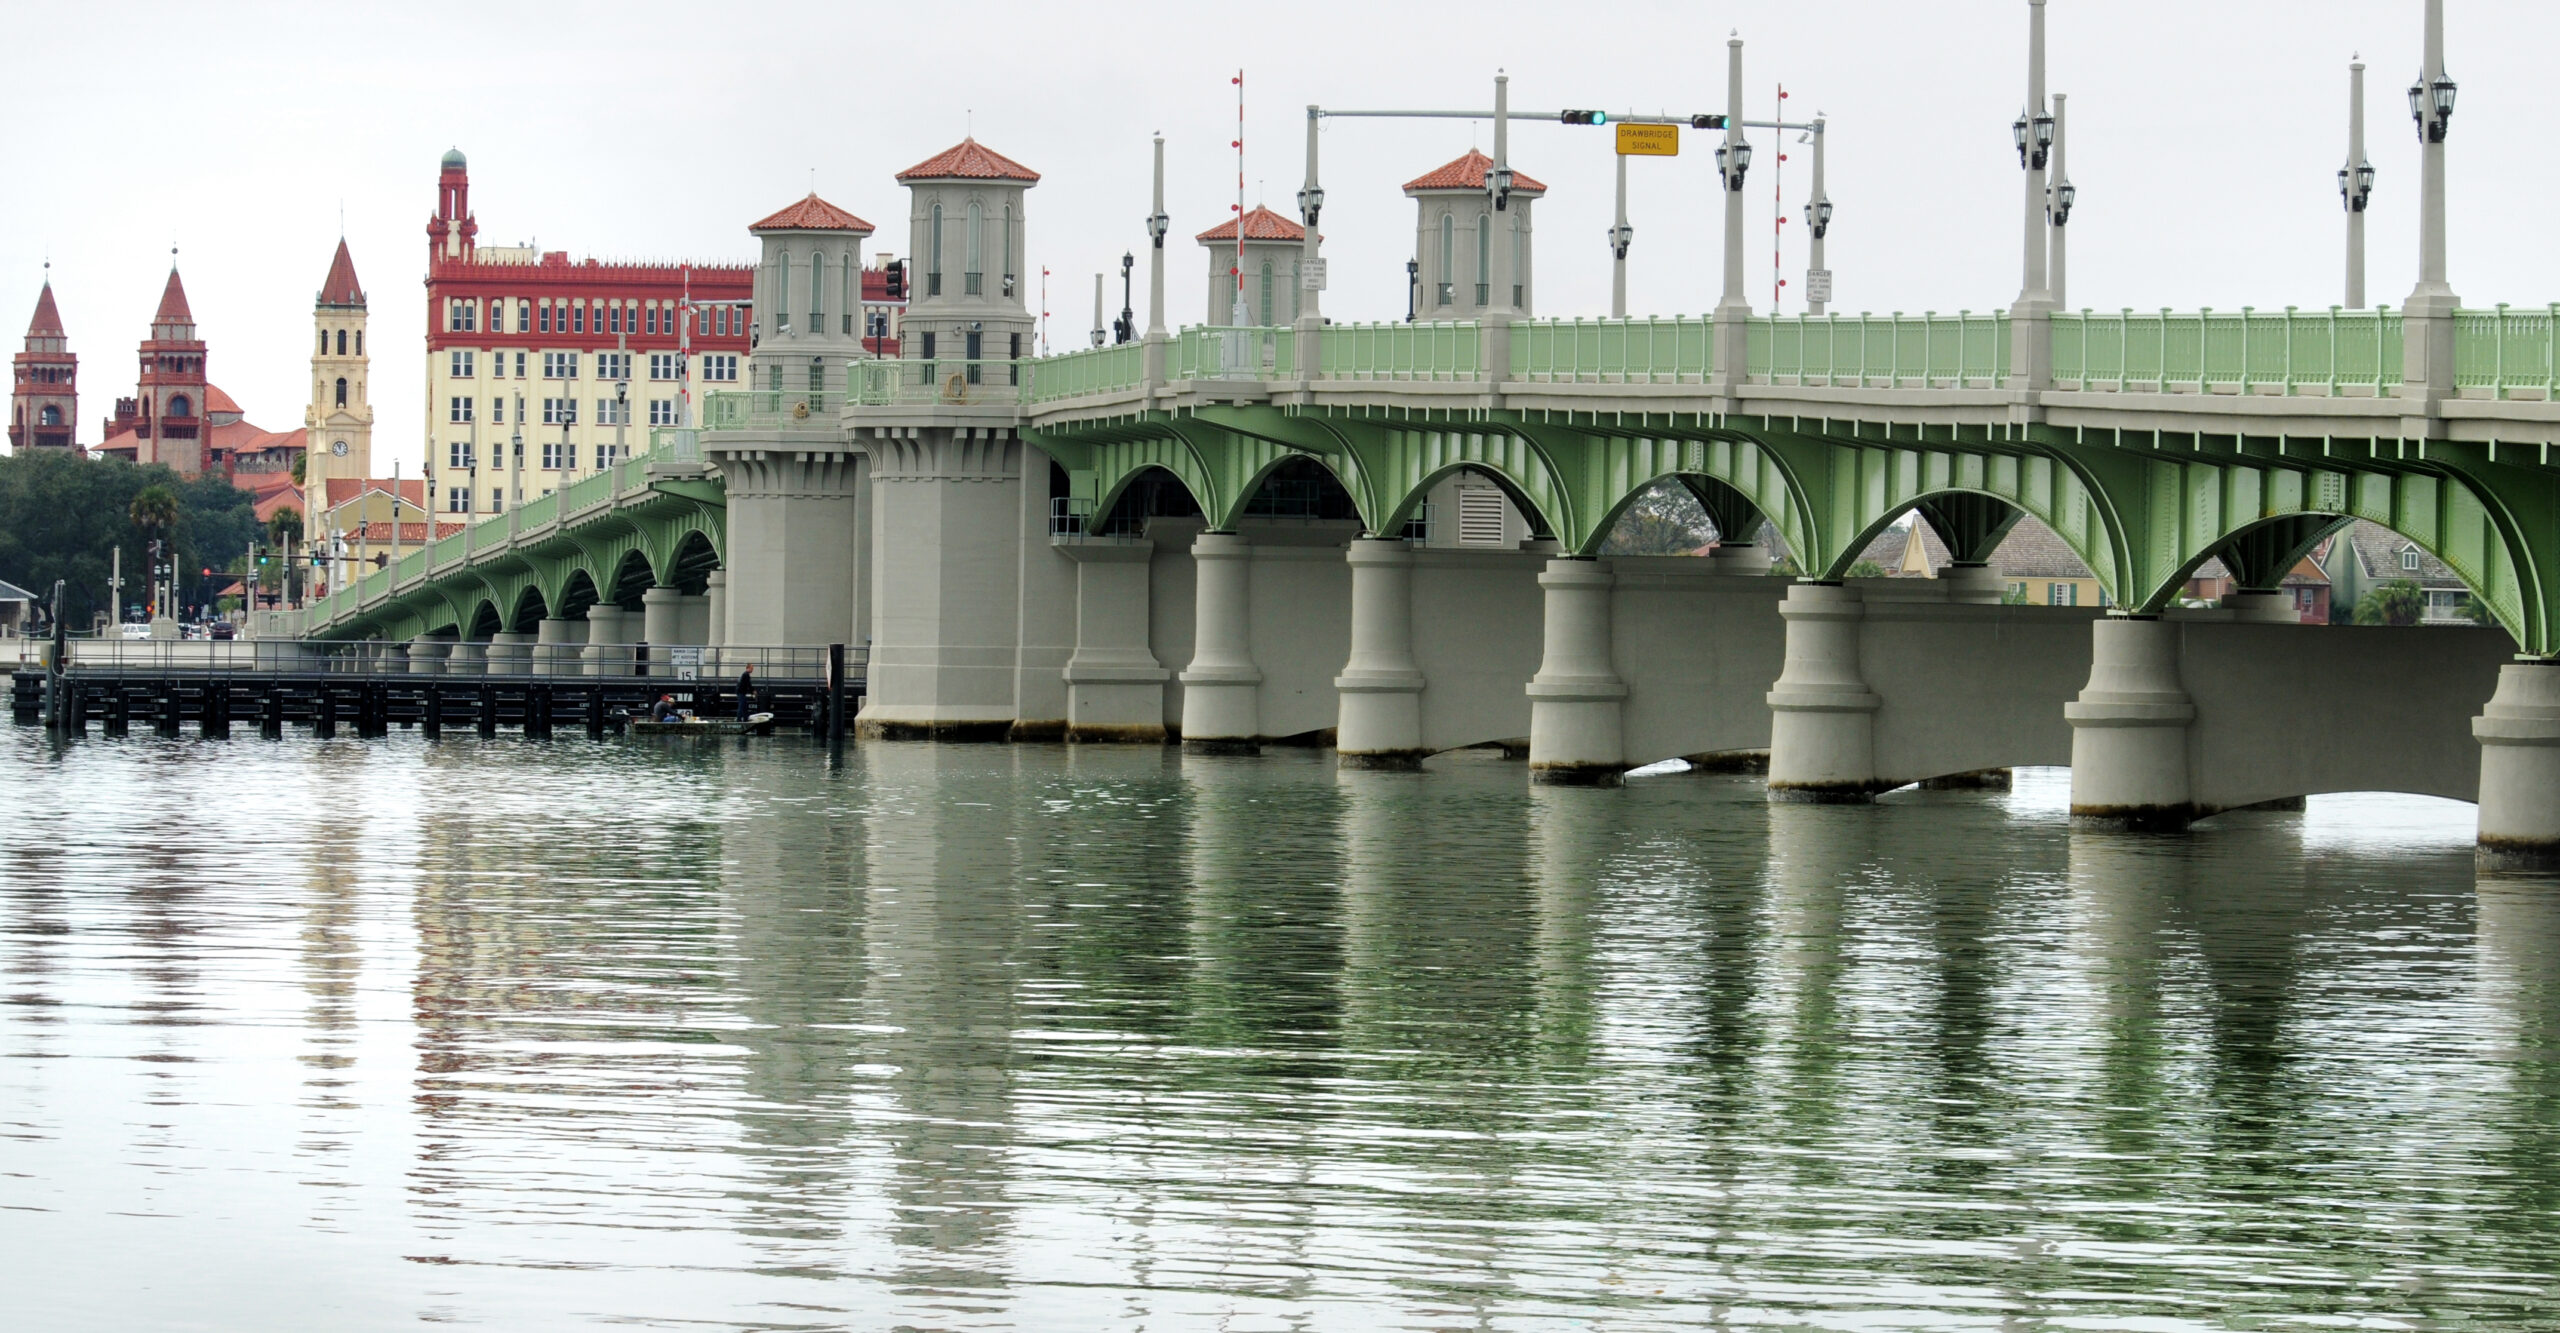 A bridge with still water